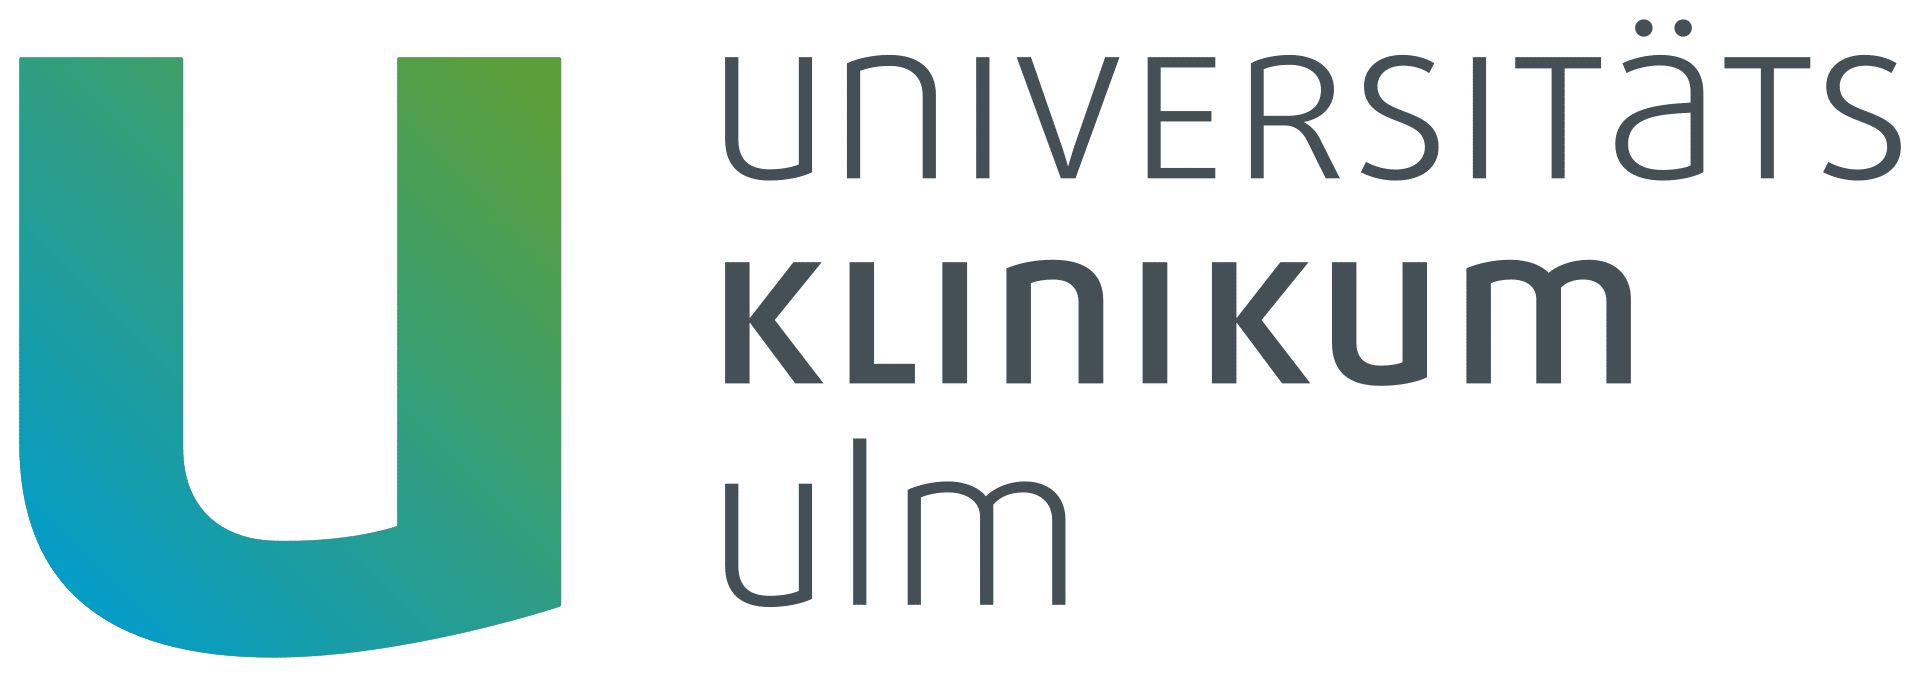 1920px universitätsklinikum ulm logo.svg